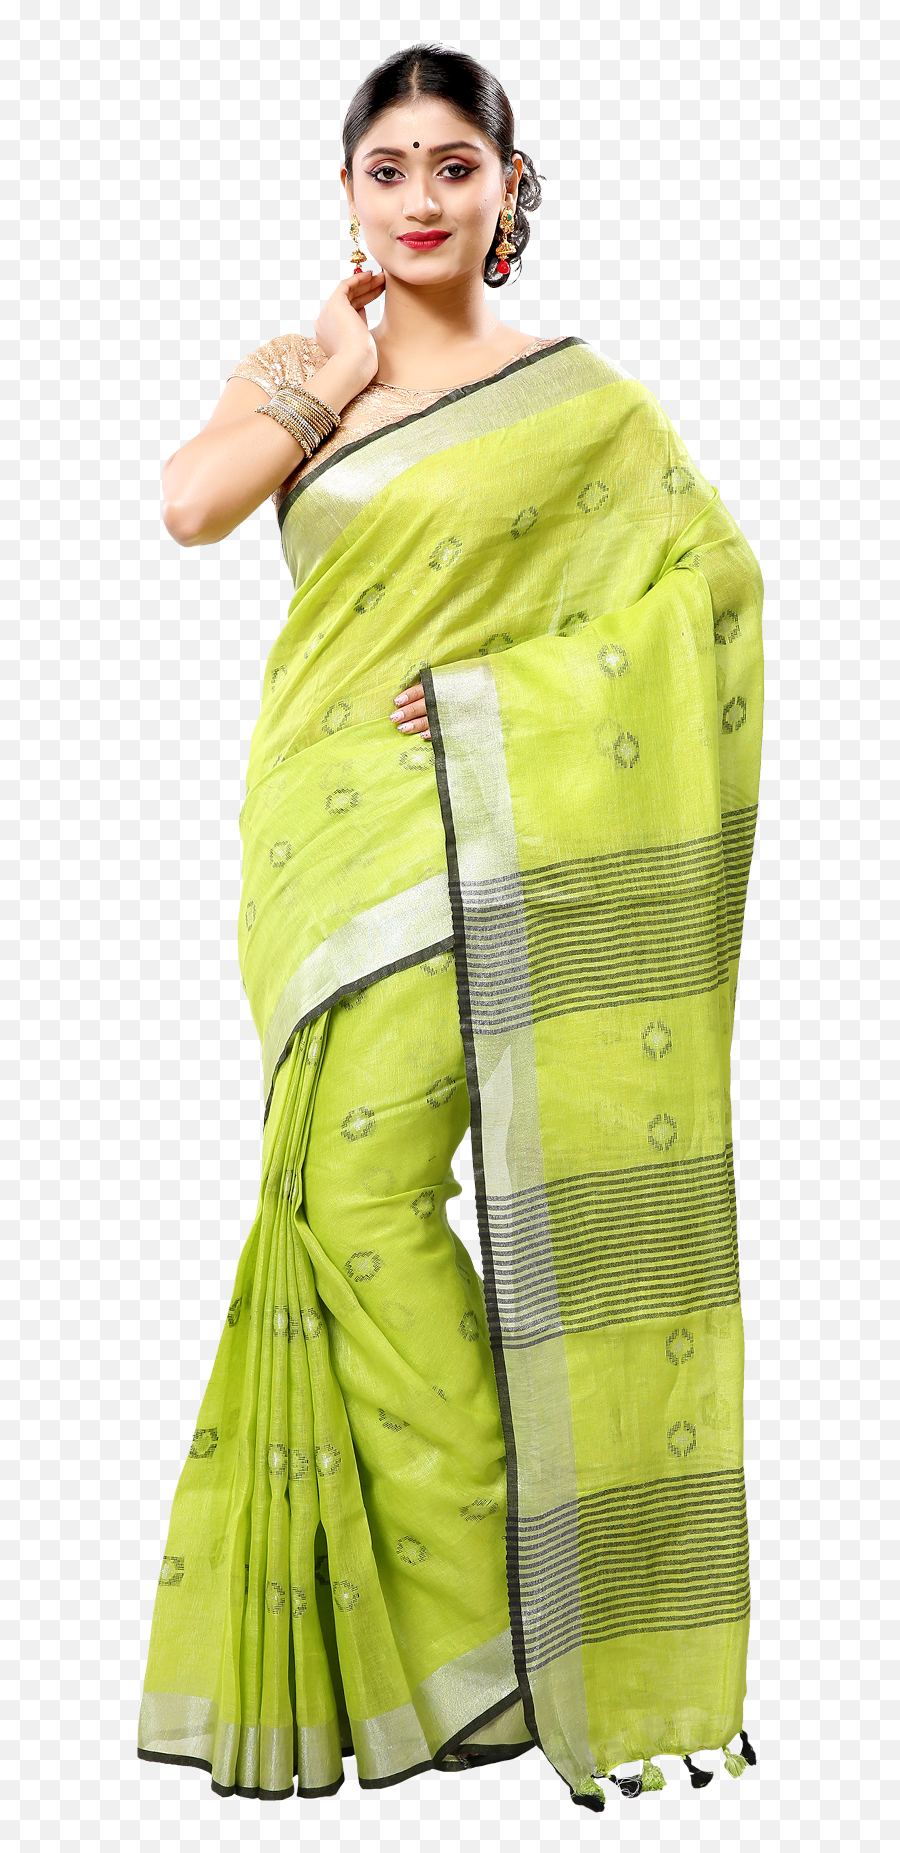 Simply The Best Fashion - Mekhela Chador Emoji,Saree Emoji